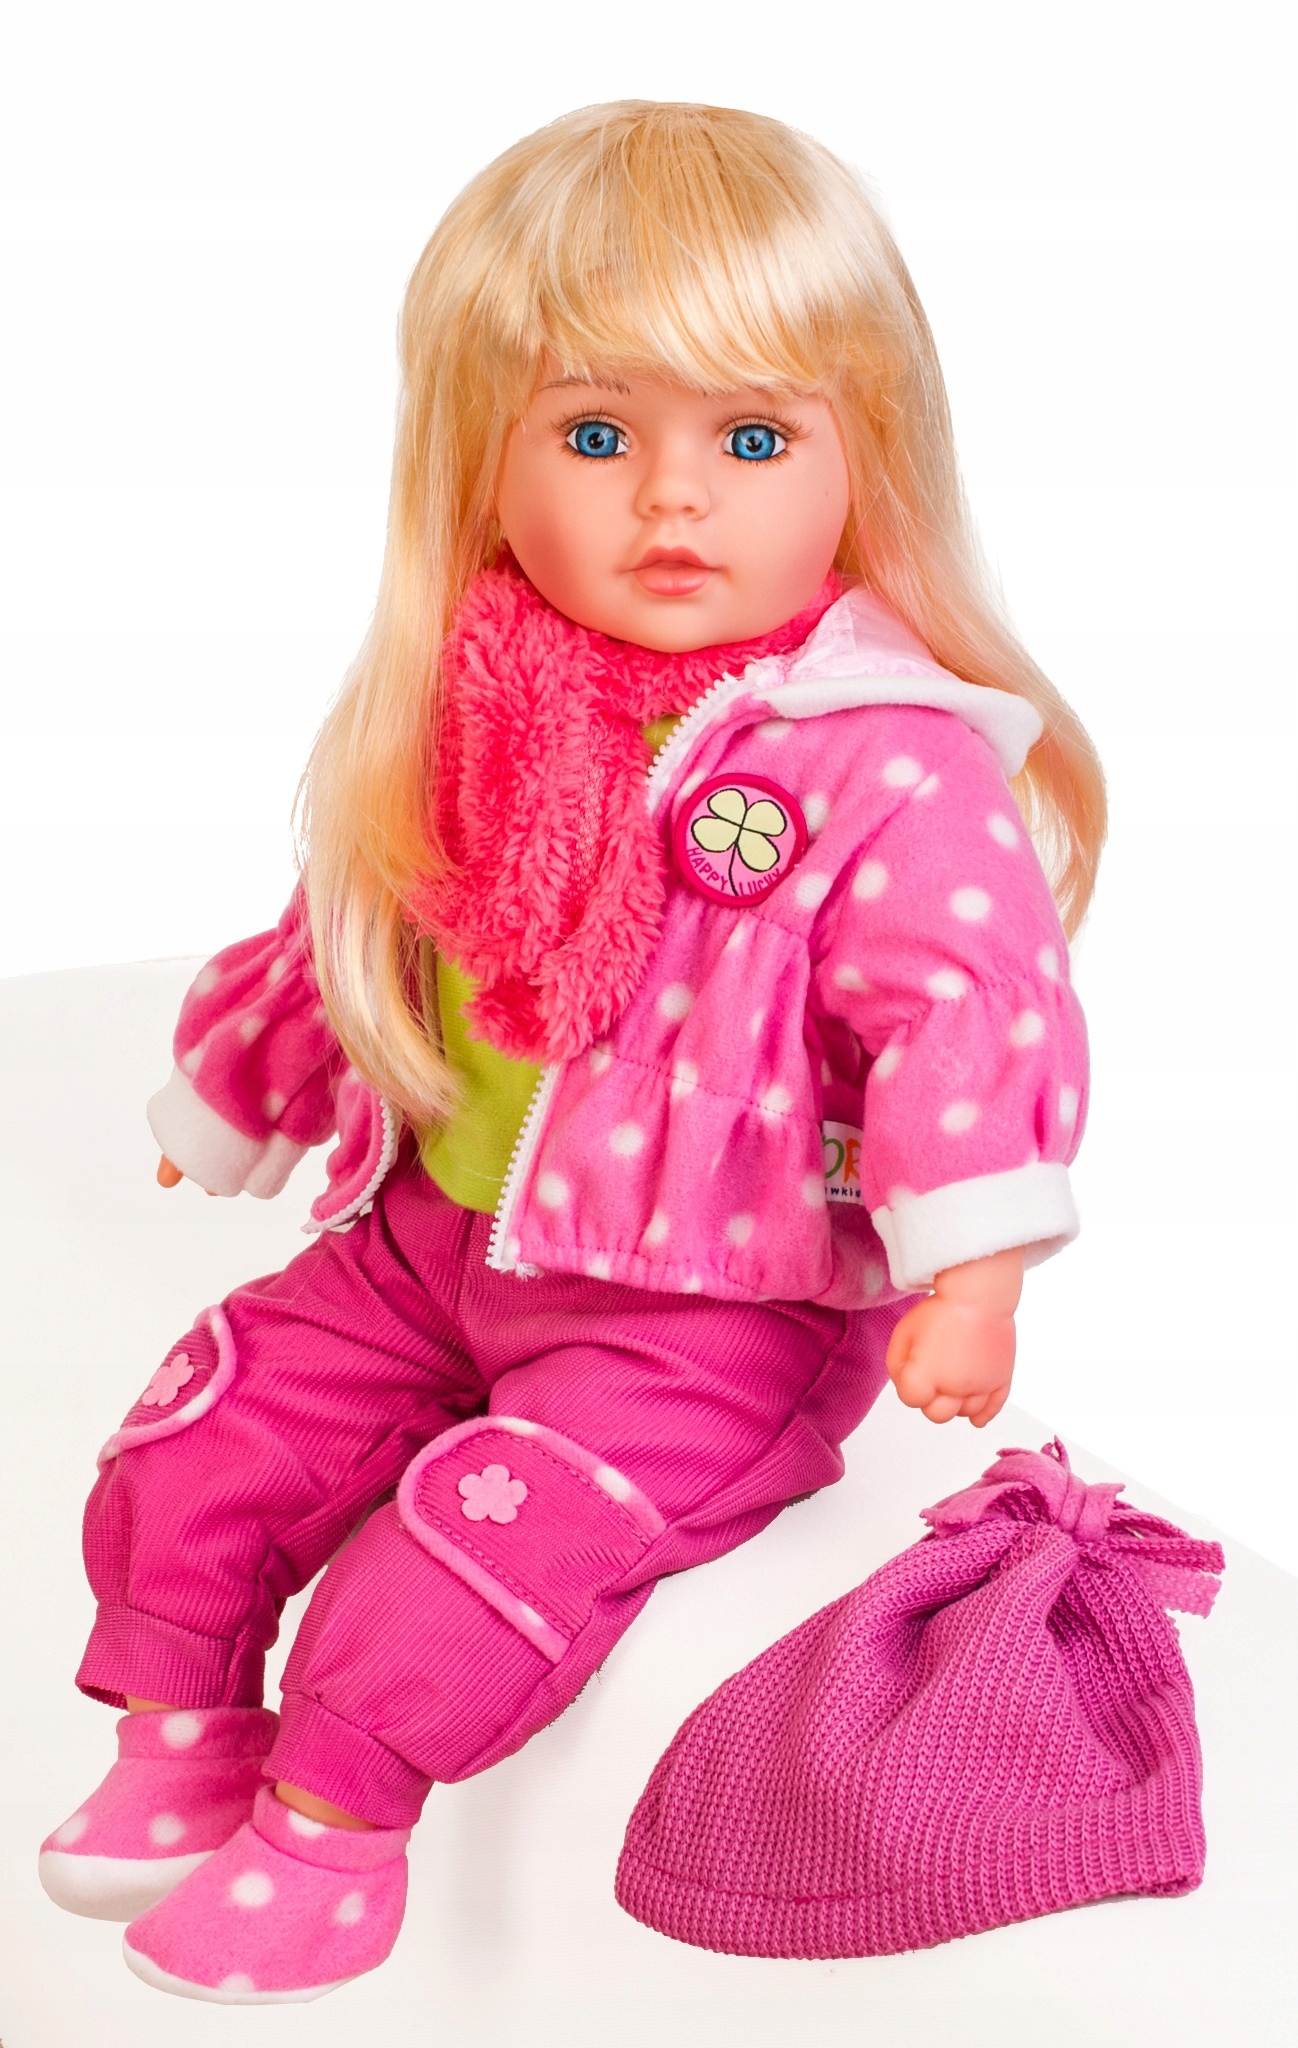 Хочу большие куклы. Большая кукла. Куклы для девочек. Большая кукла для девочки. Интерактивные куклы для девочек.